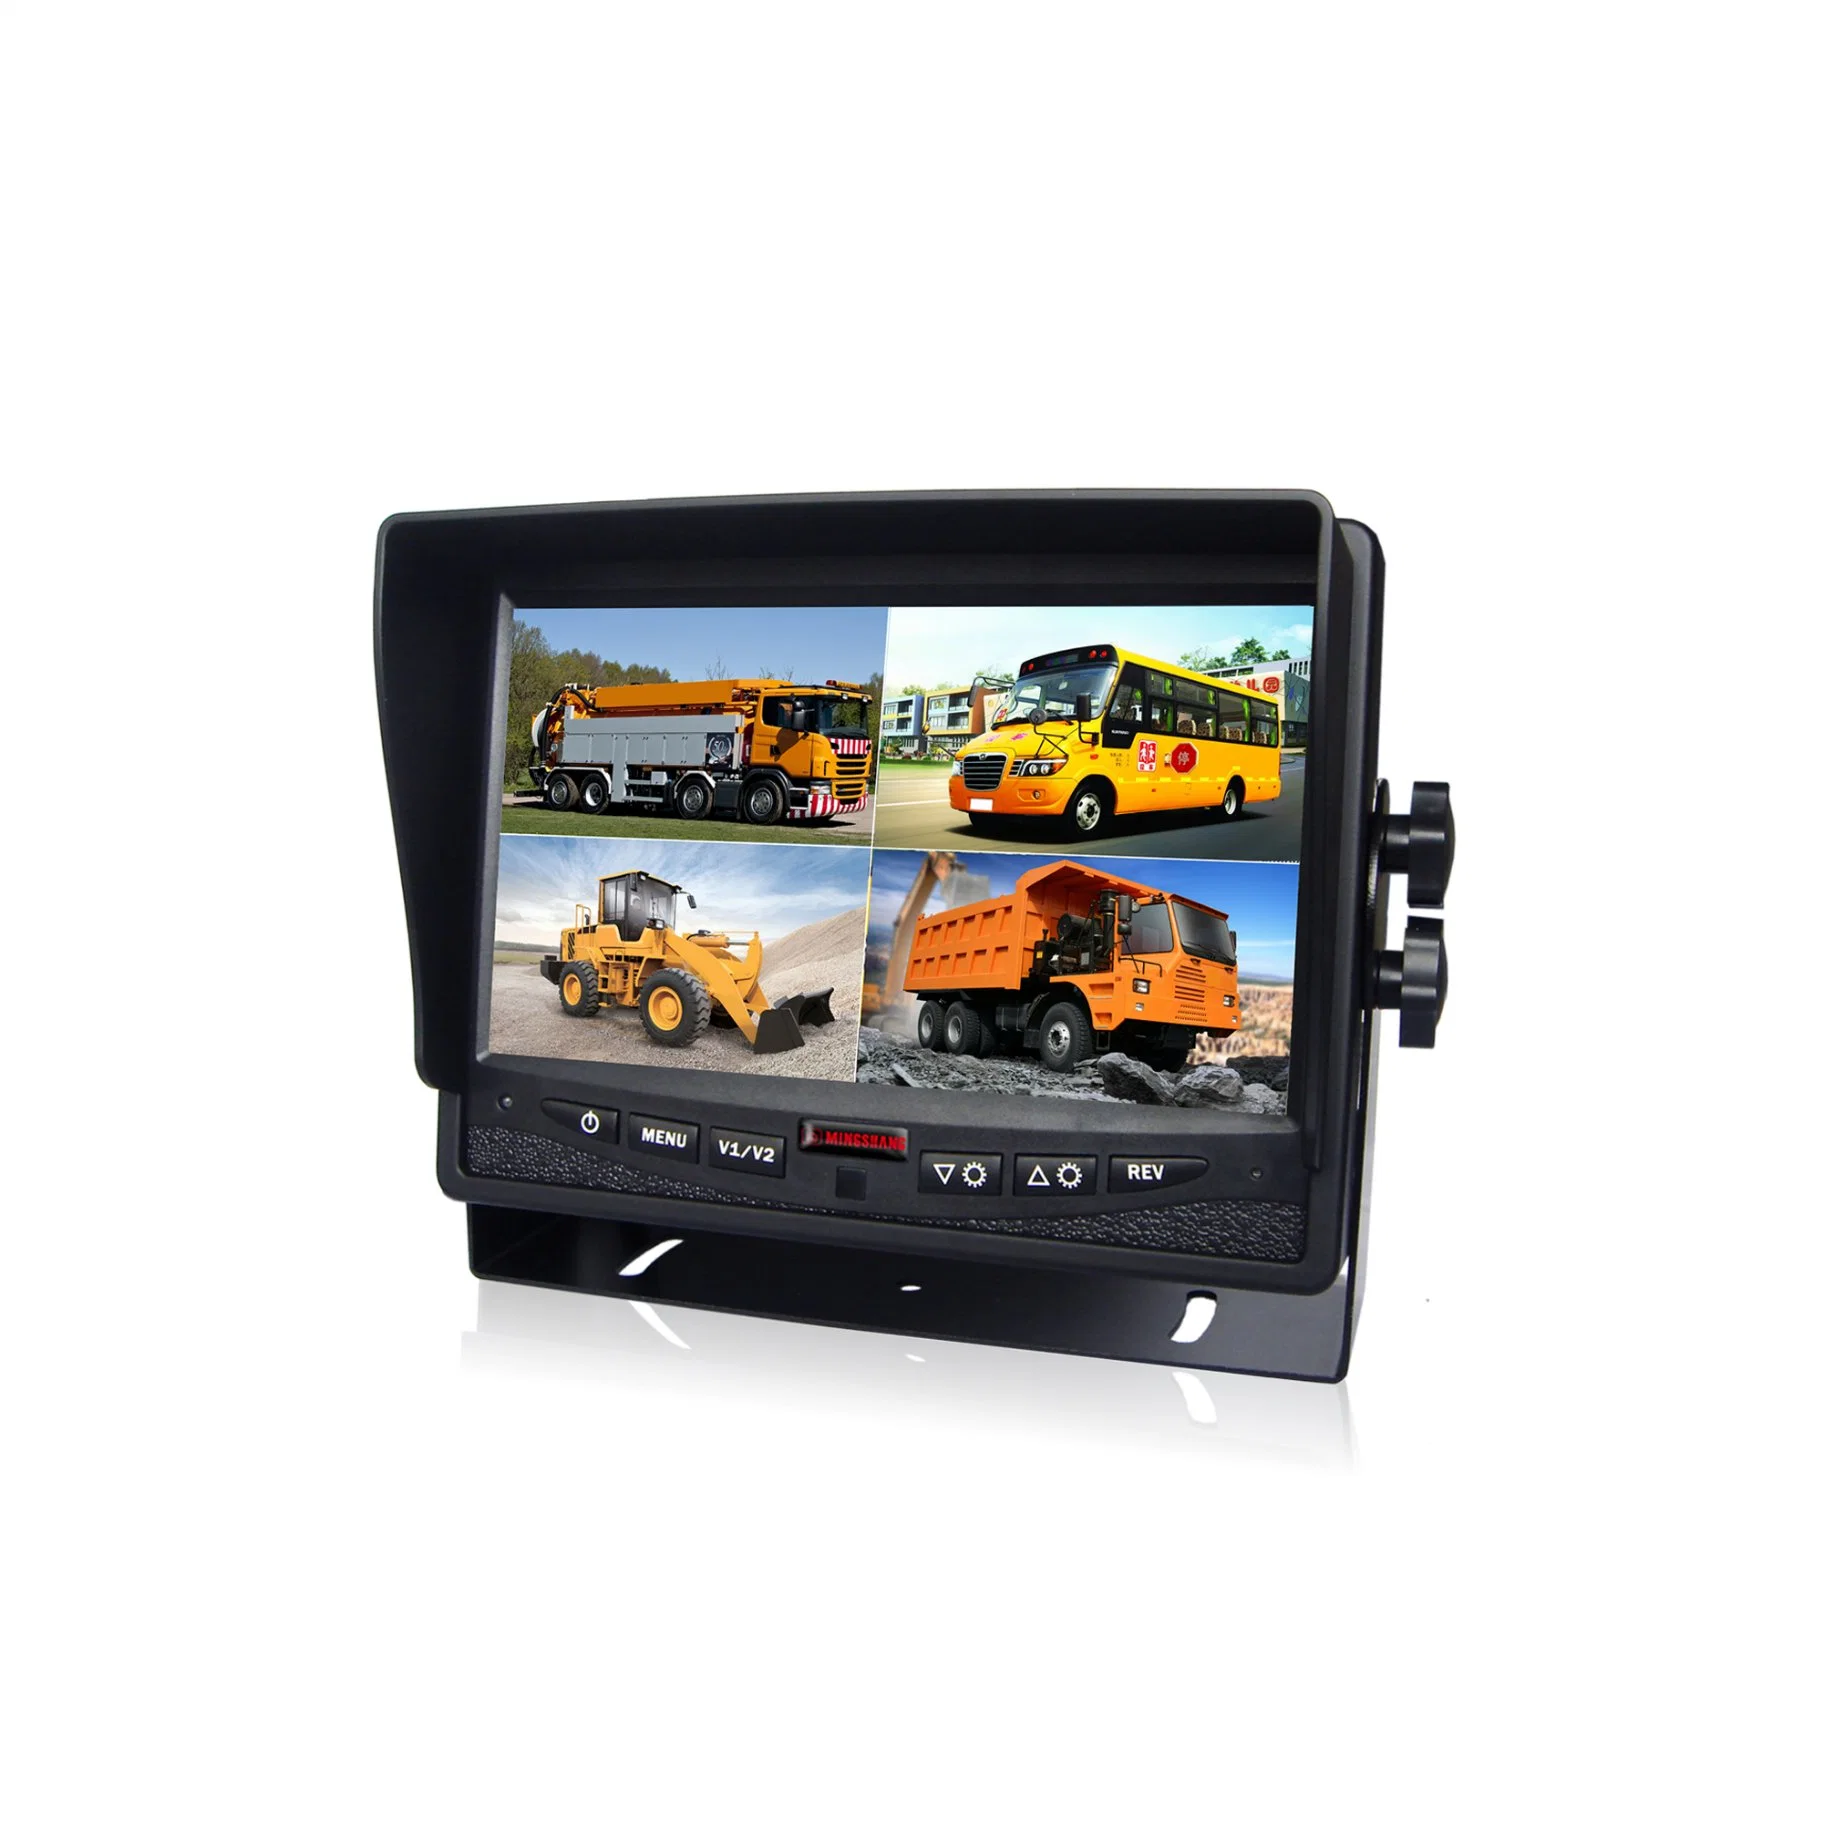 DC12V-24V 7inch Quad Rear View Car LCD Monitor 4CH AV for Truck, School Bus